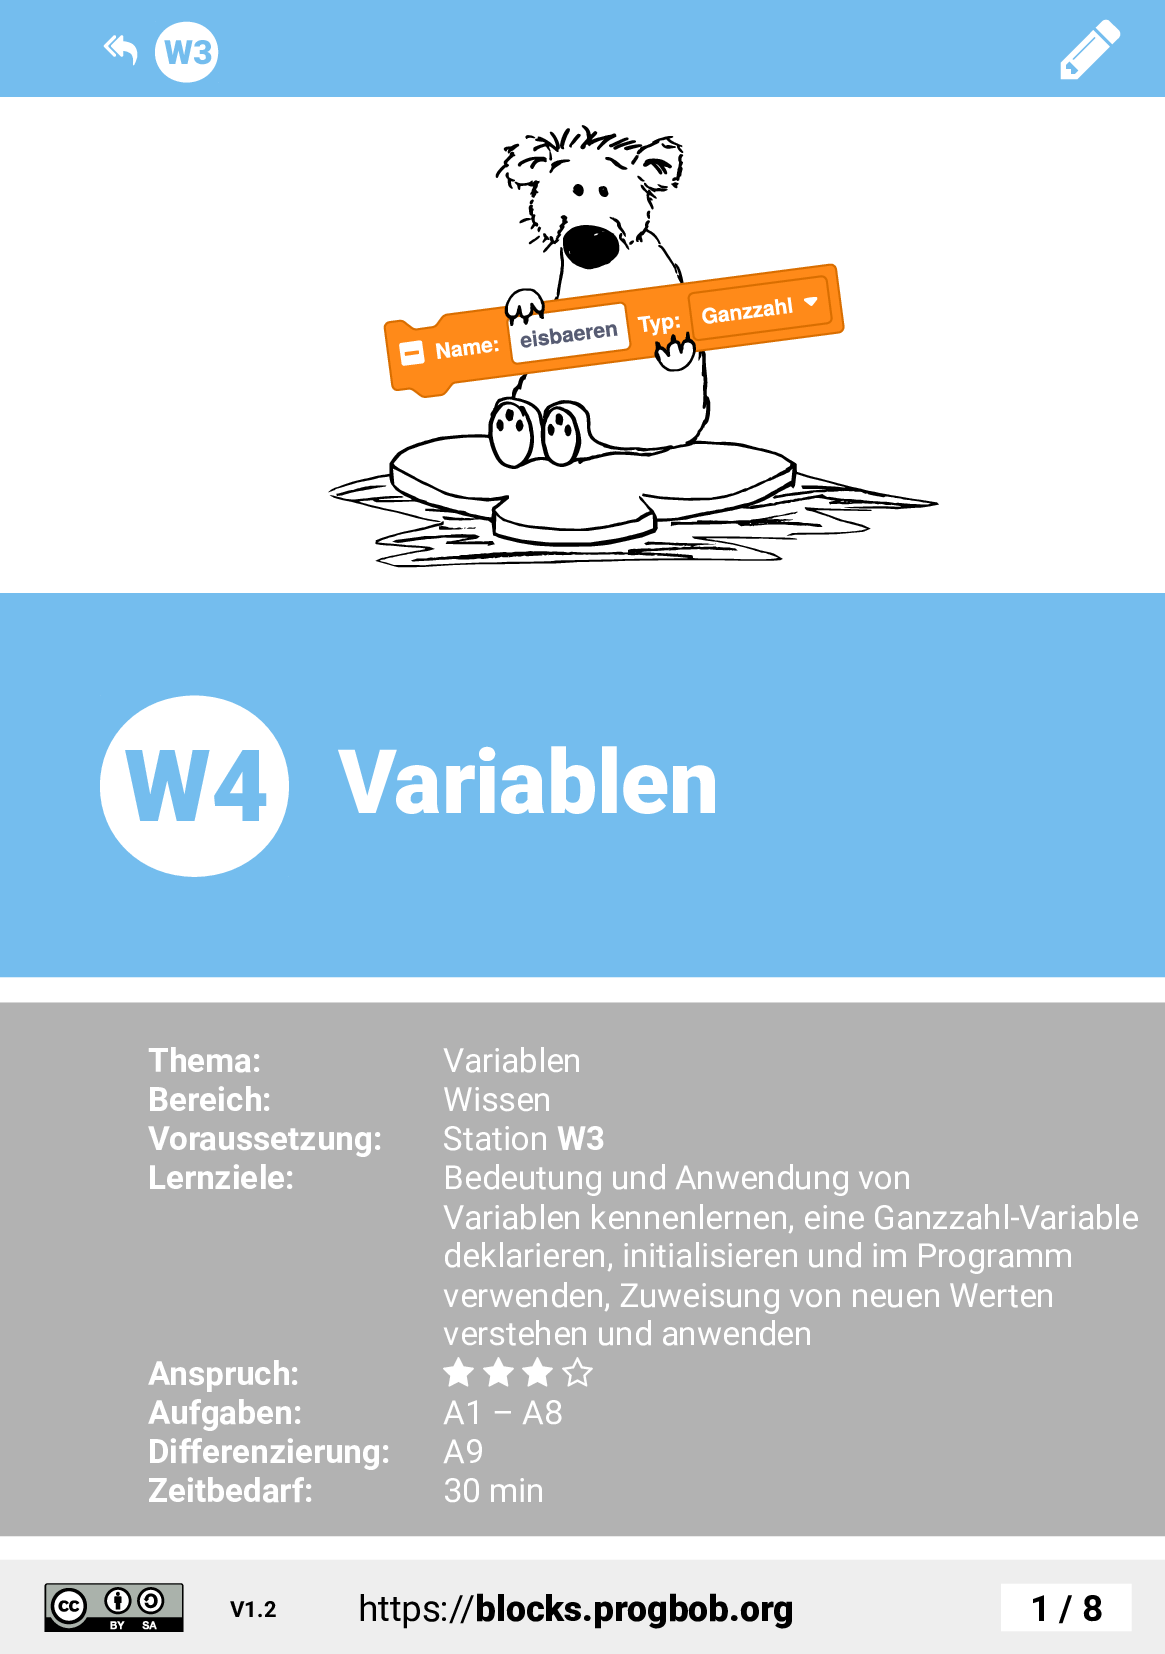 Station W4 - Variablen - Deckblatt